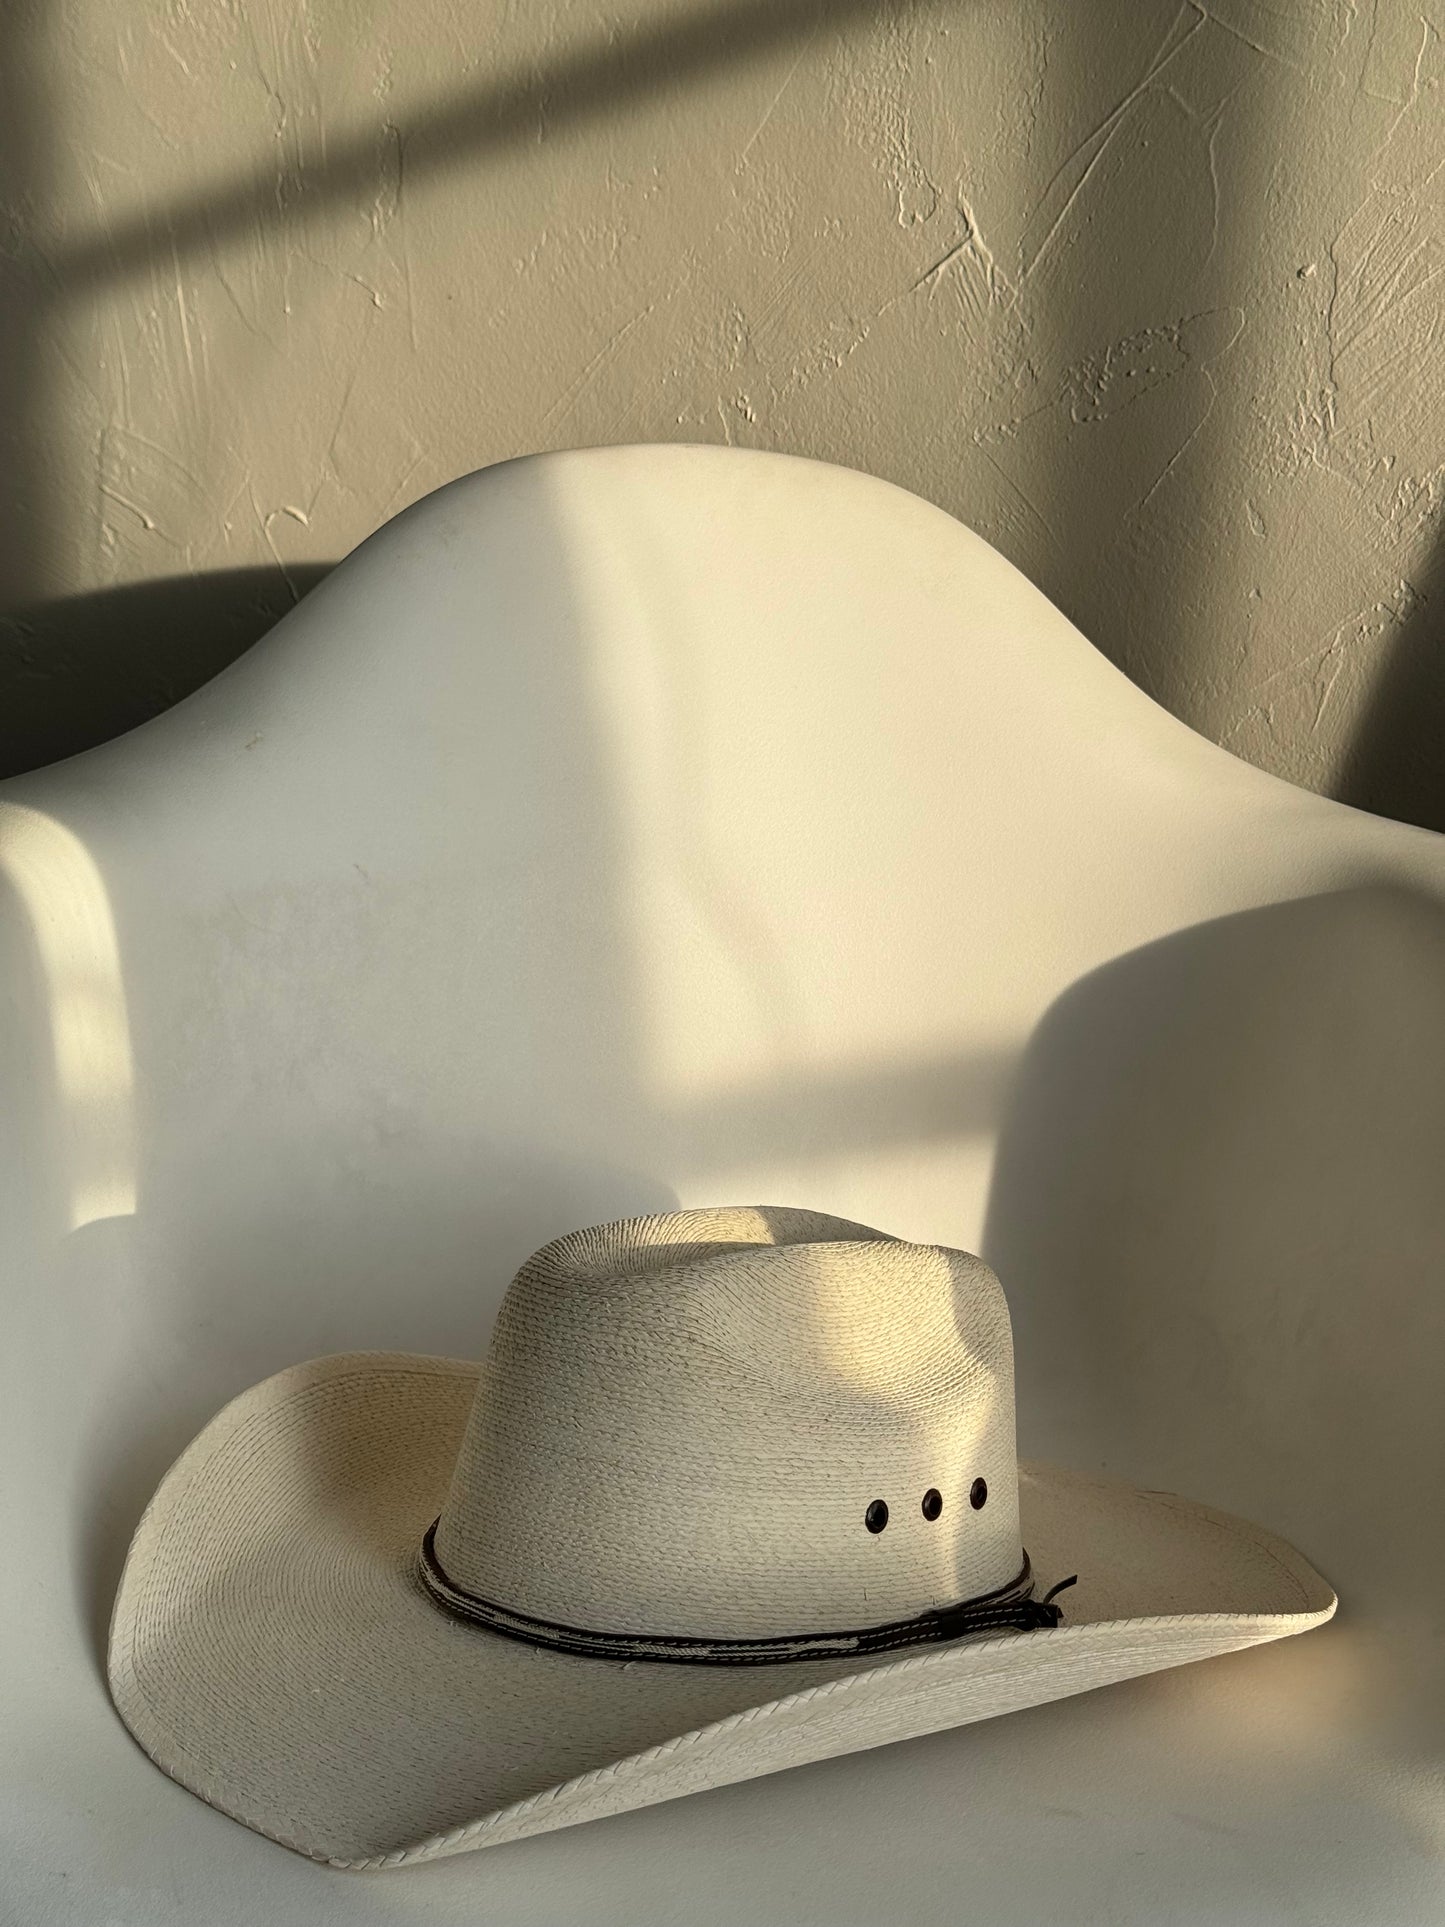 Morgan Spring Summer Palm W/ Leather & Knit Band Cowboy Hat